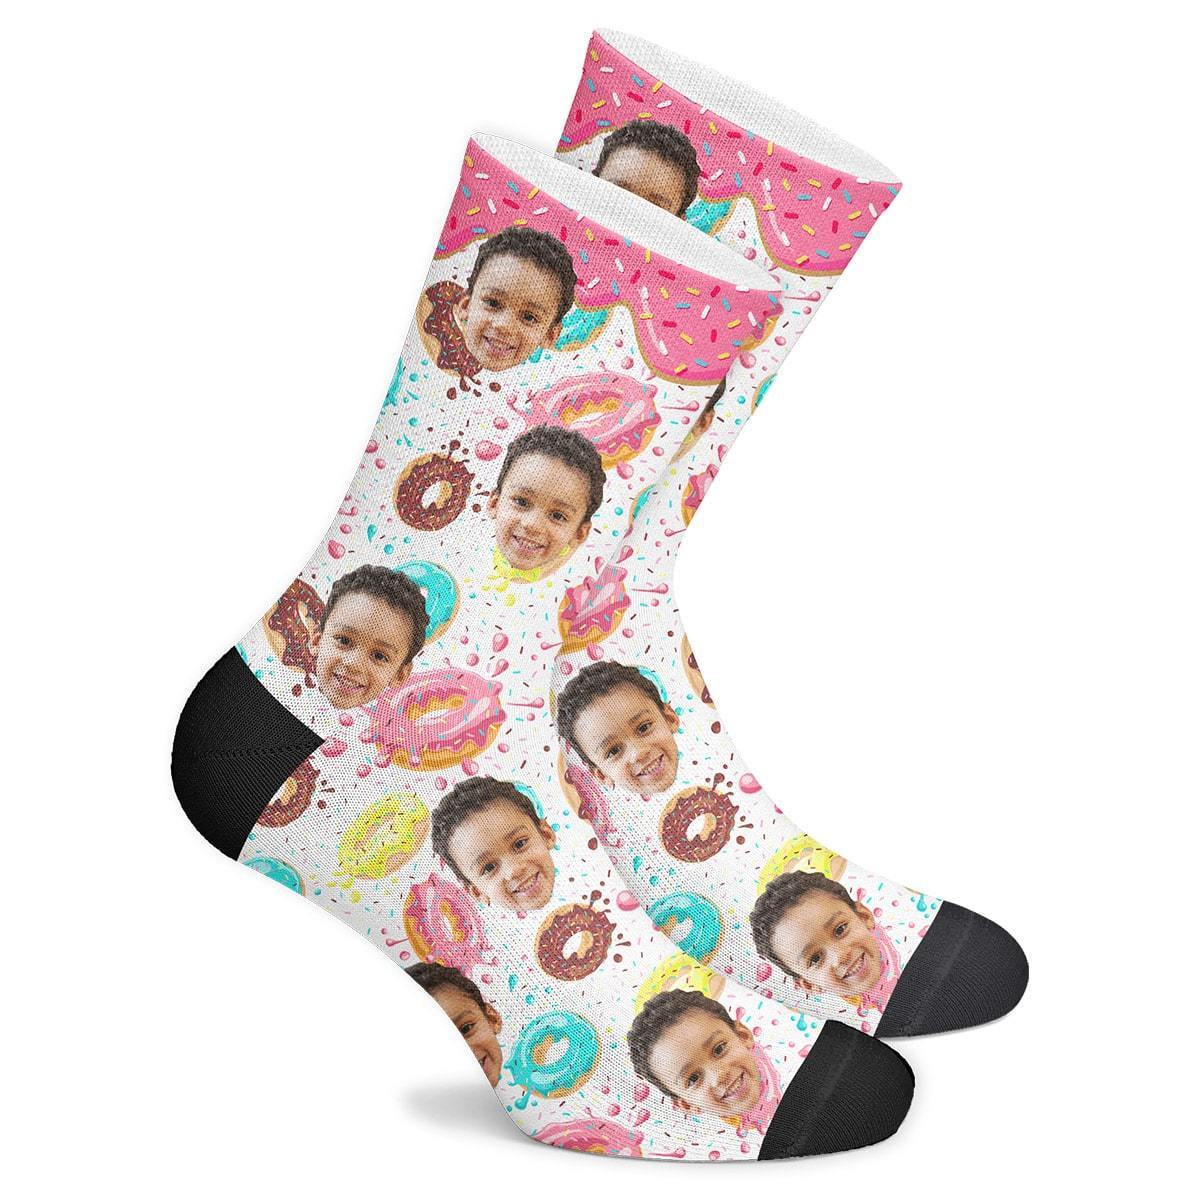 Customized Donut Socks